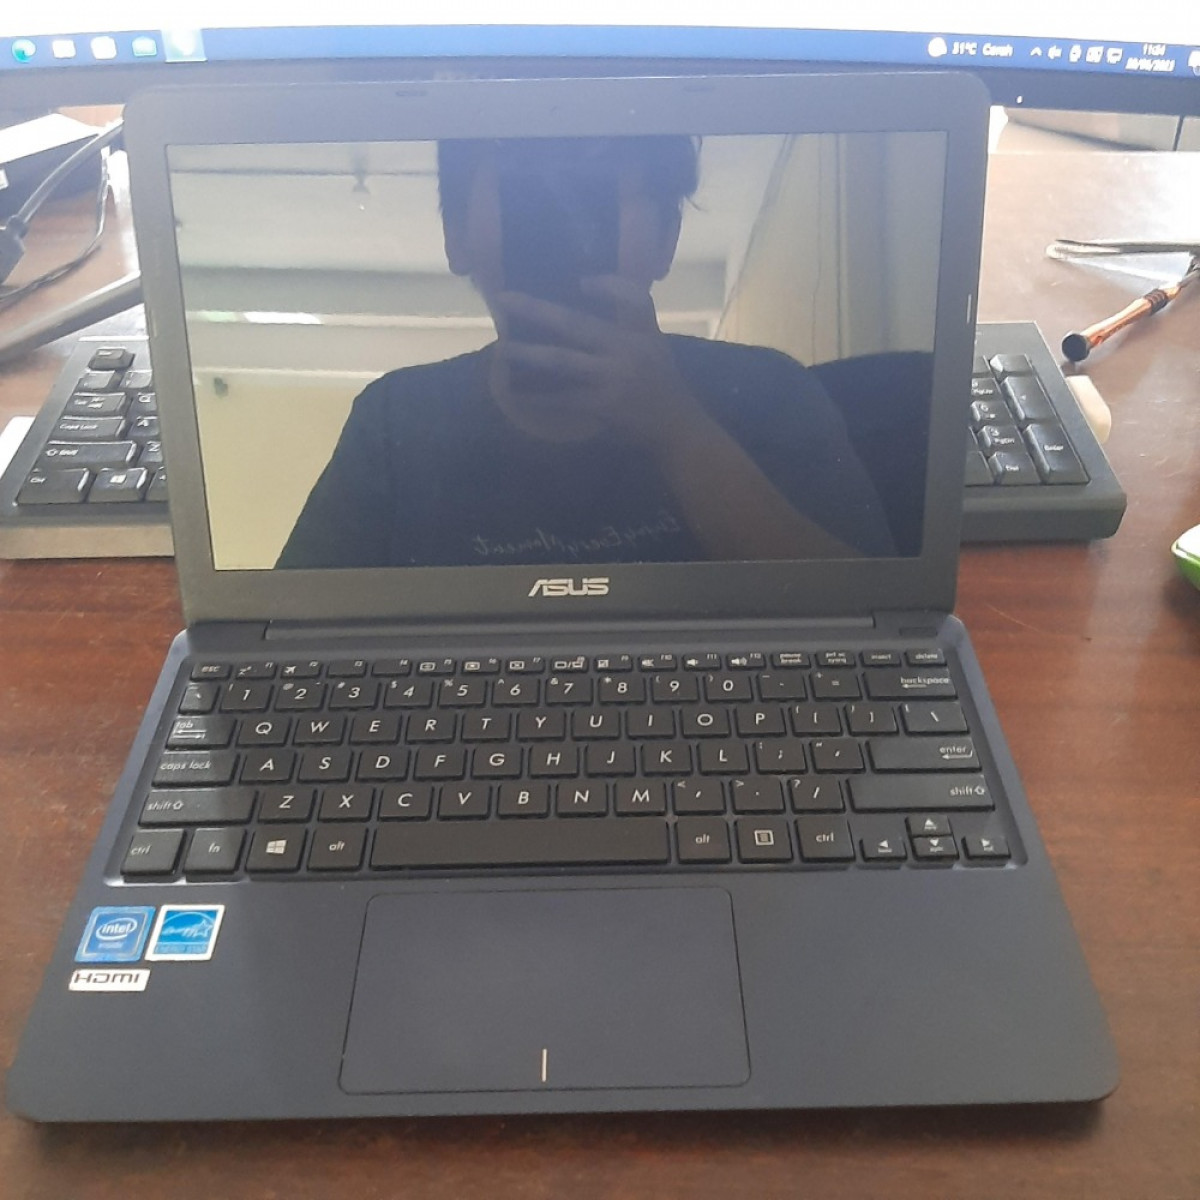 Laptop Notebook ASUS L200H Intel Atom x5-Z8350 4GB DDR3 64GB eMMC